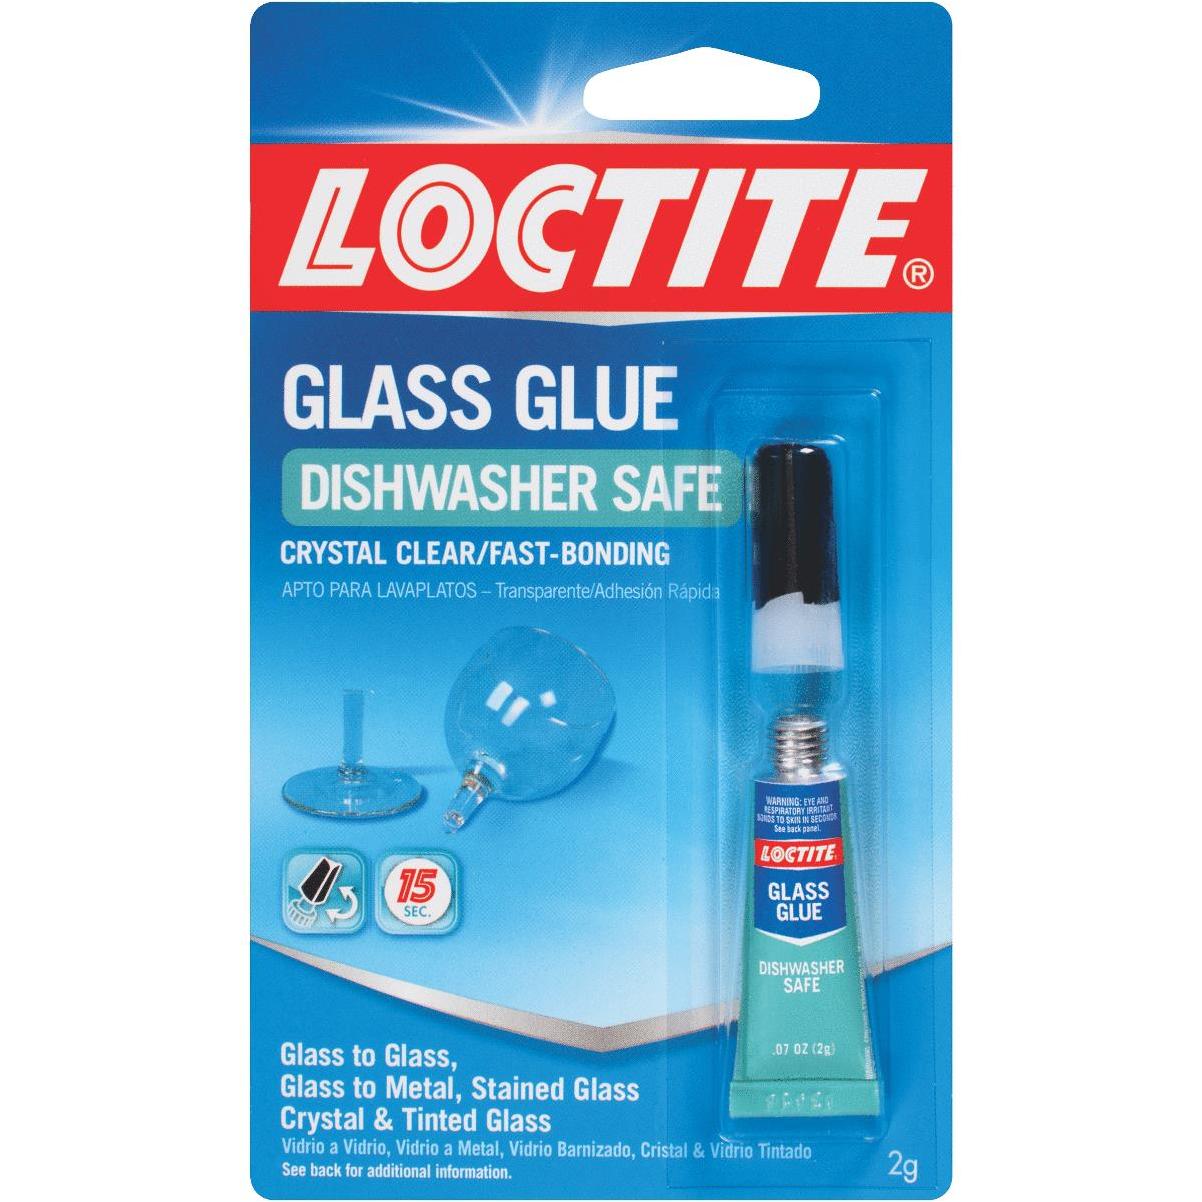 LOCTITE GLASSBOND GLASS & METAL ADHESIVE GLUE